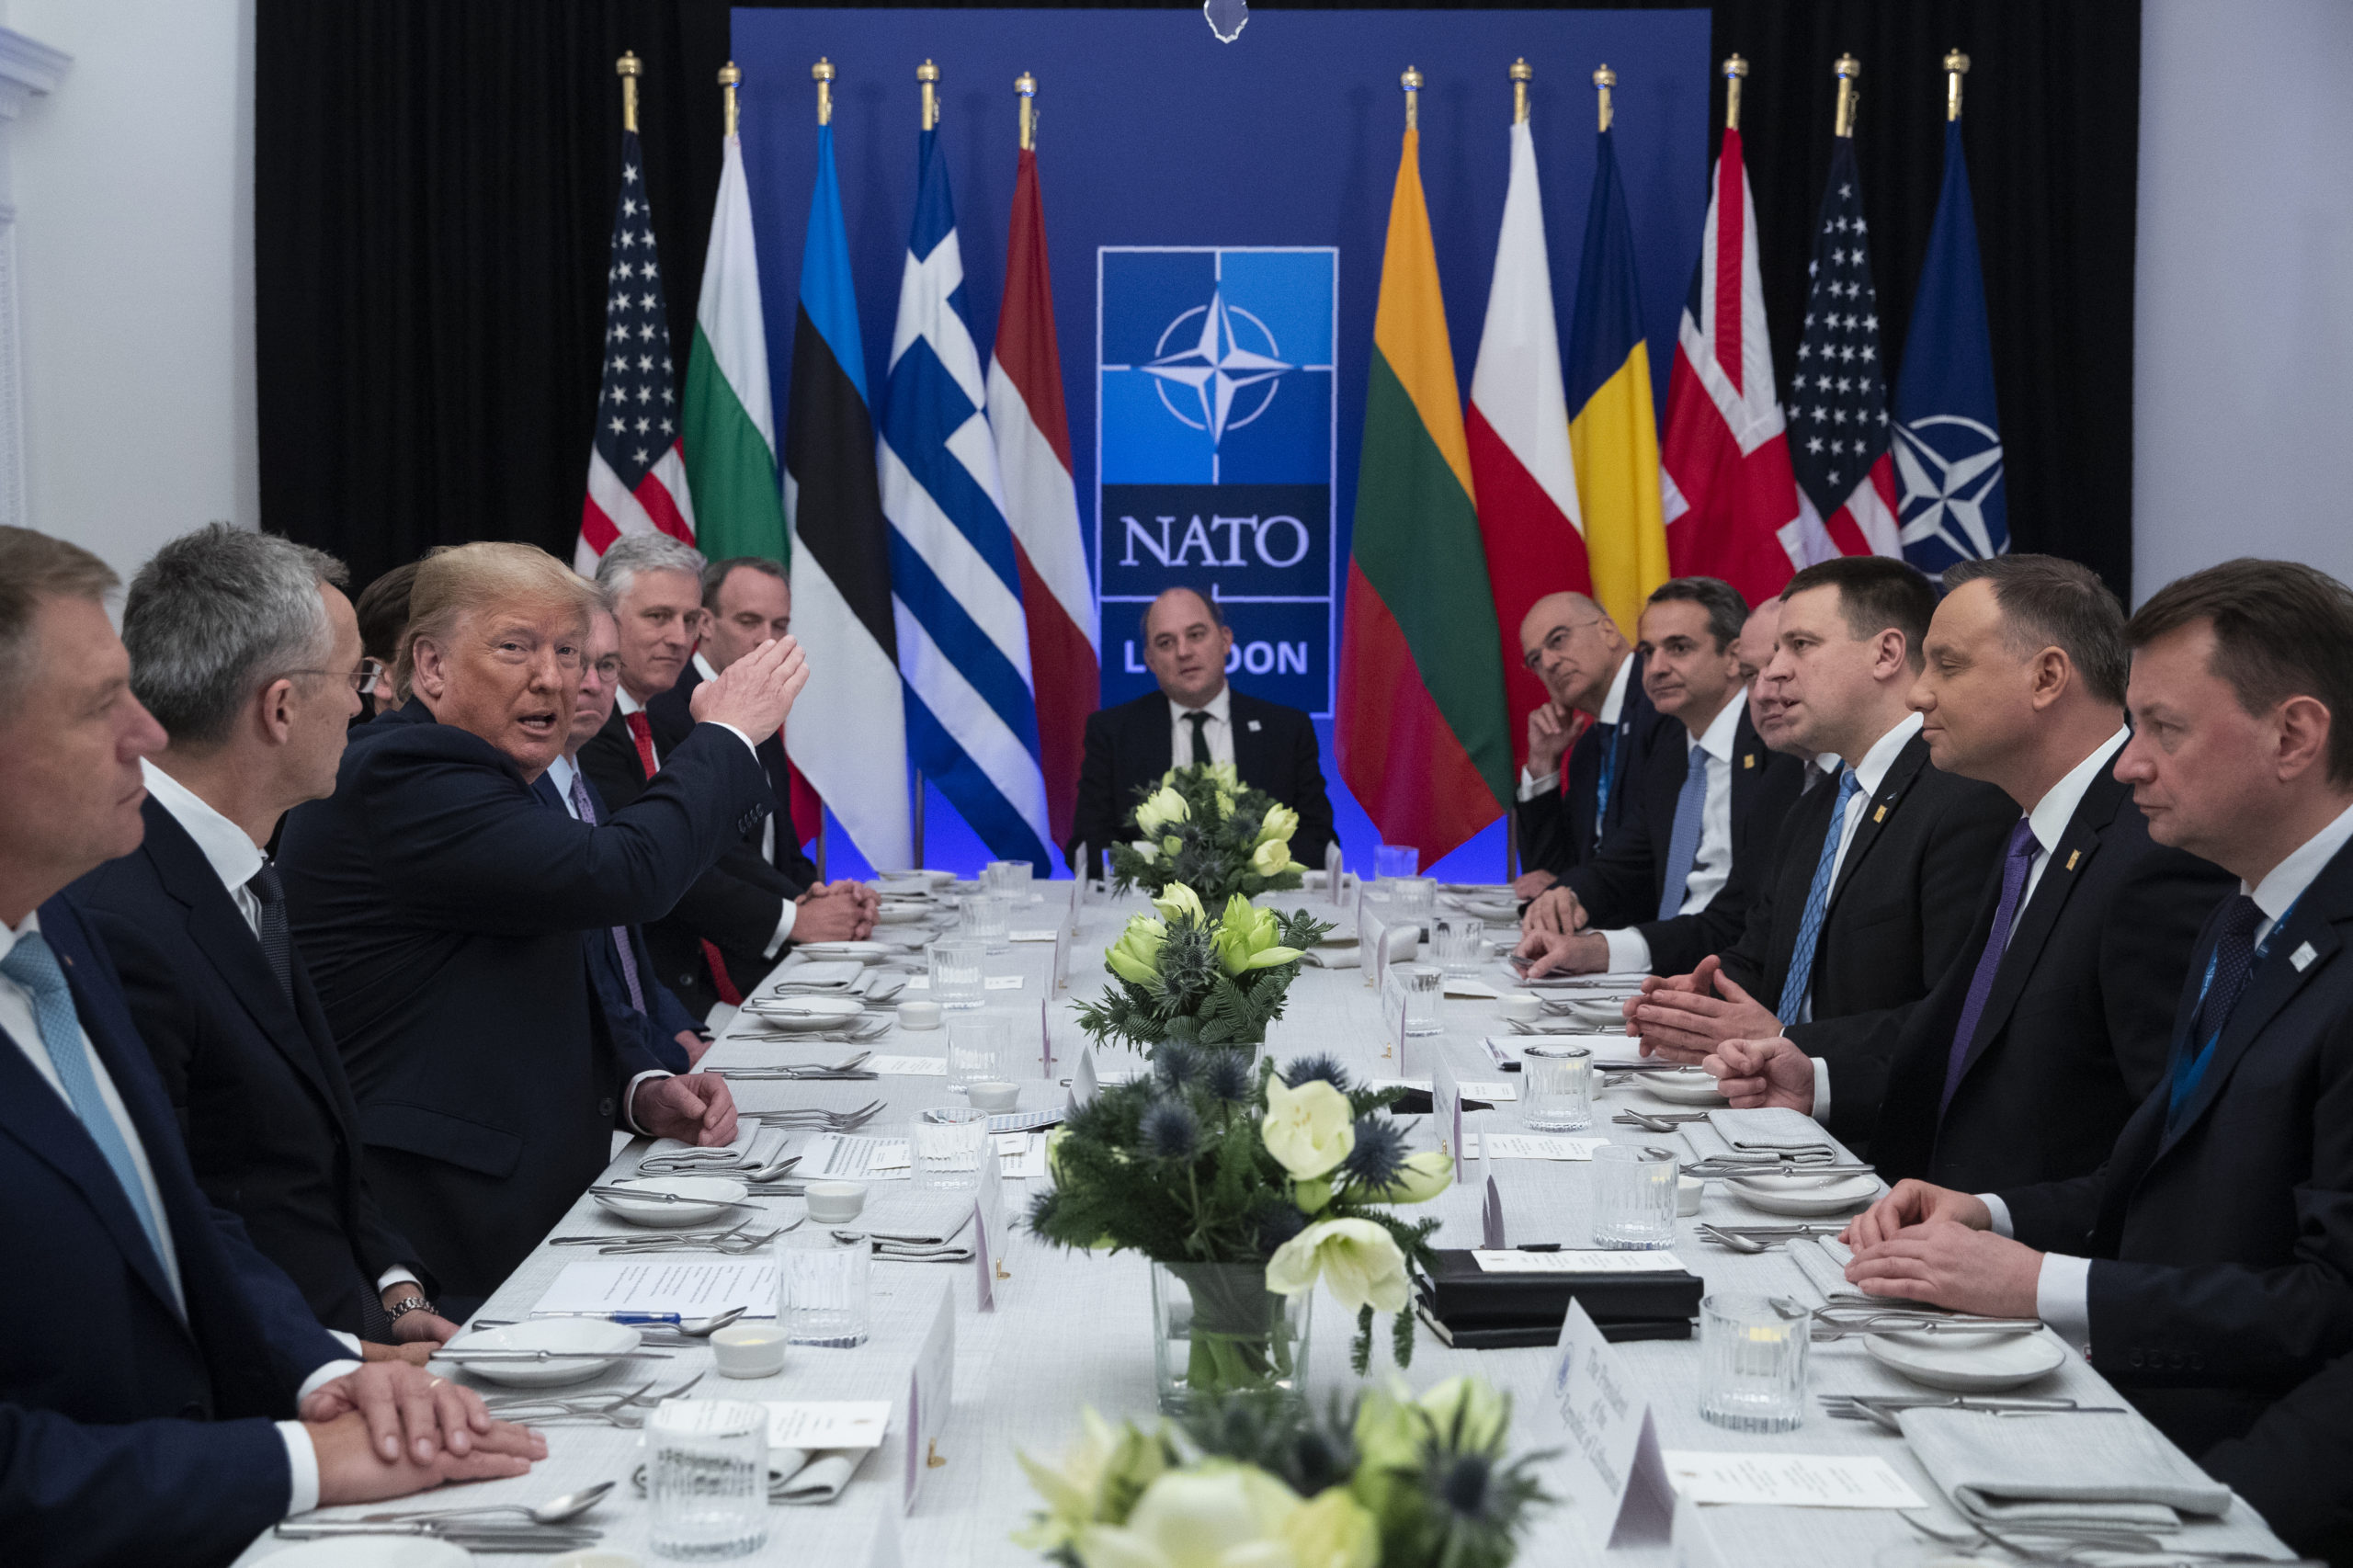 Глава альянса нато. Североатлантический Альянс НАТО. NATO (North Atlantic Treaty Organization) - Североатлантический военный Альянс (НАТО).. Саммит НАТО 1999. Саммит Альянса НАТО.